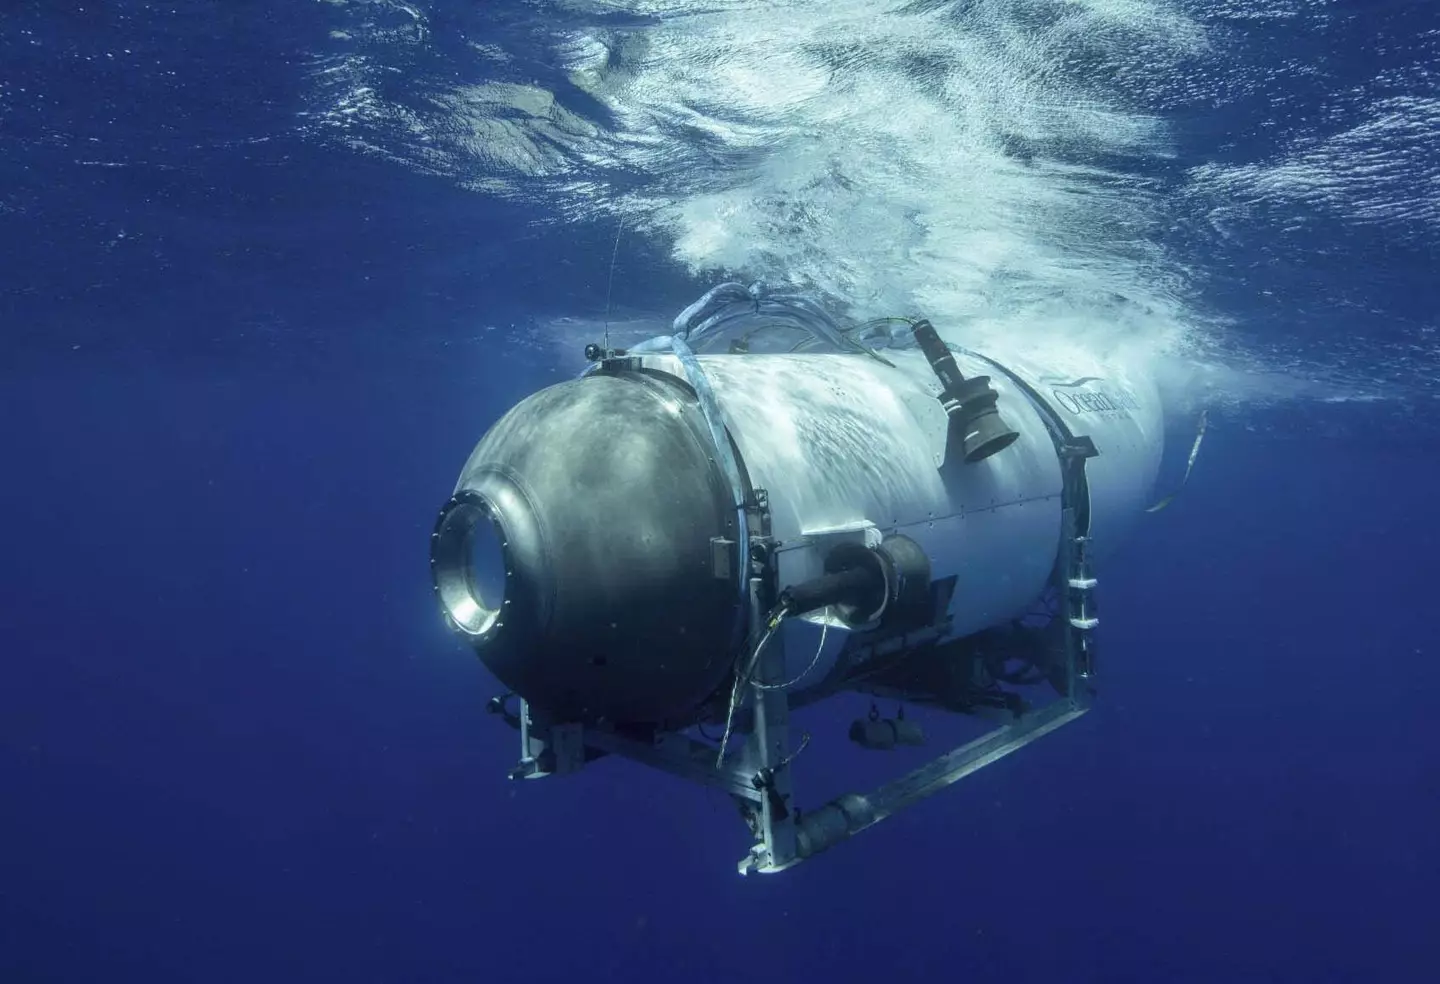 The Titan submarine disappeared last week.